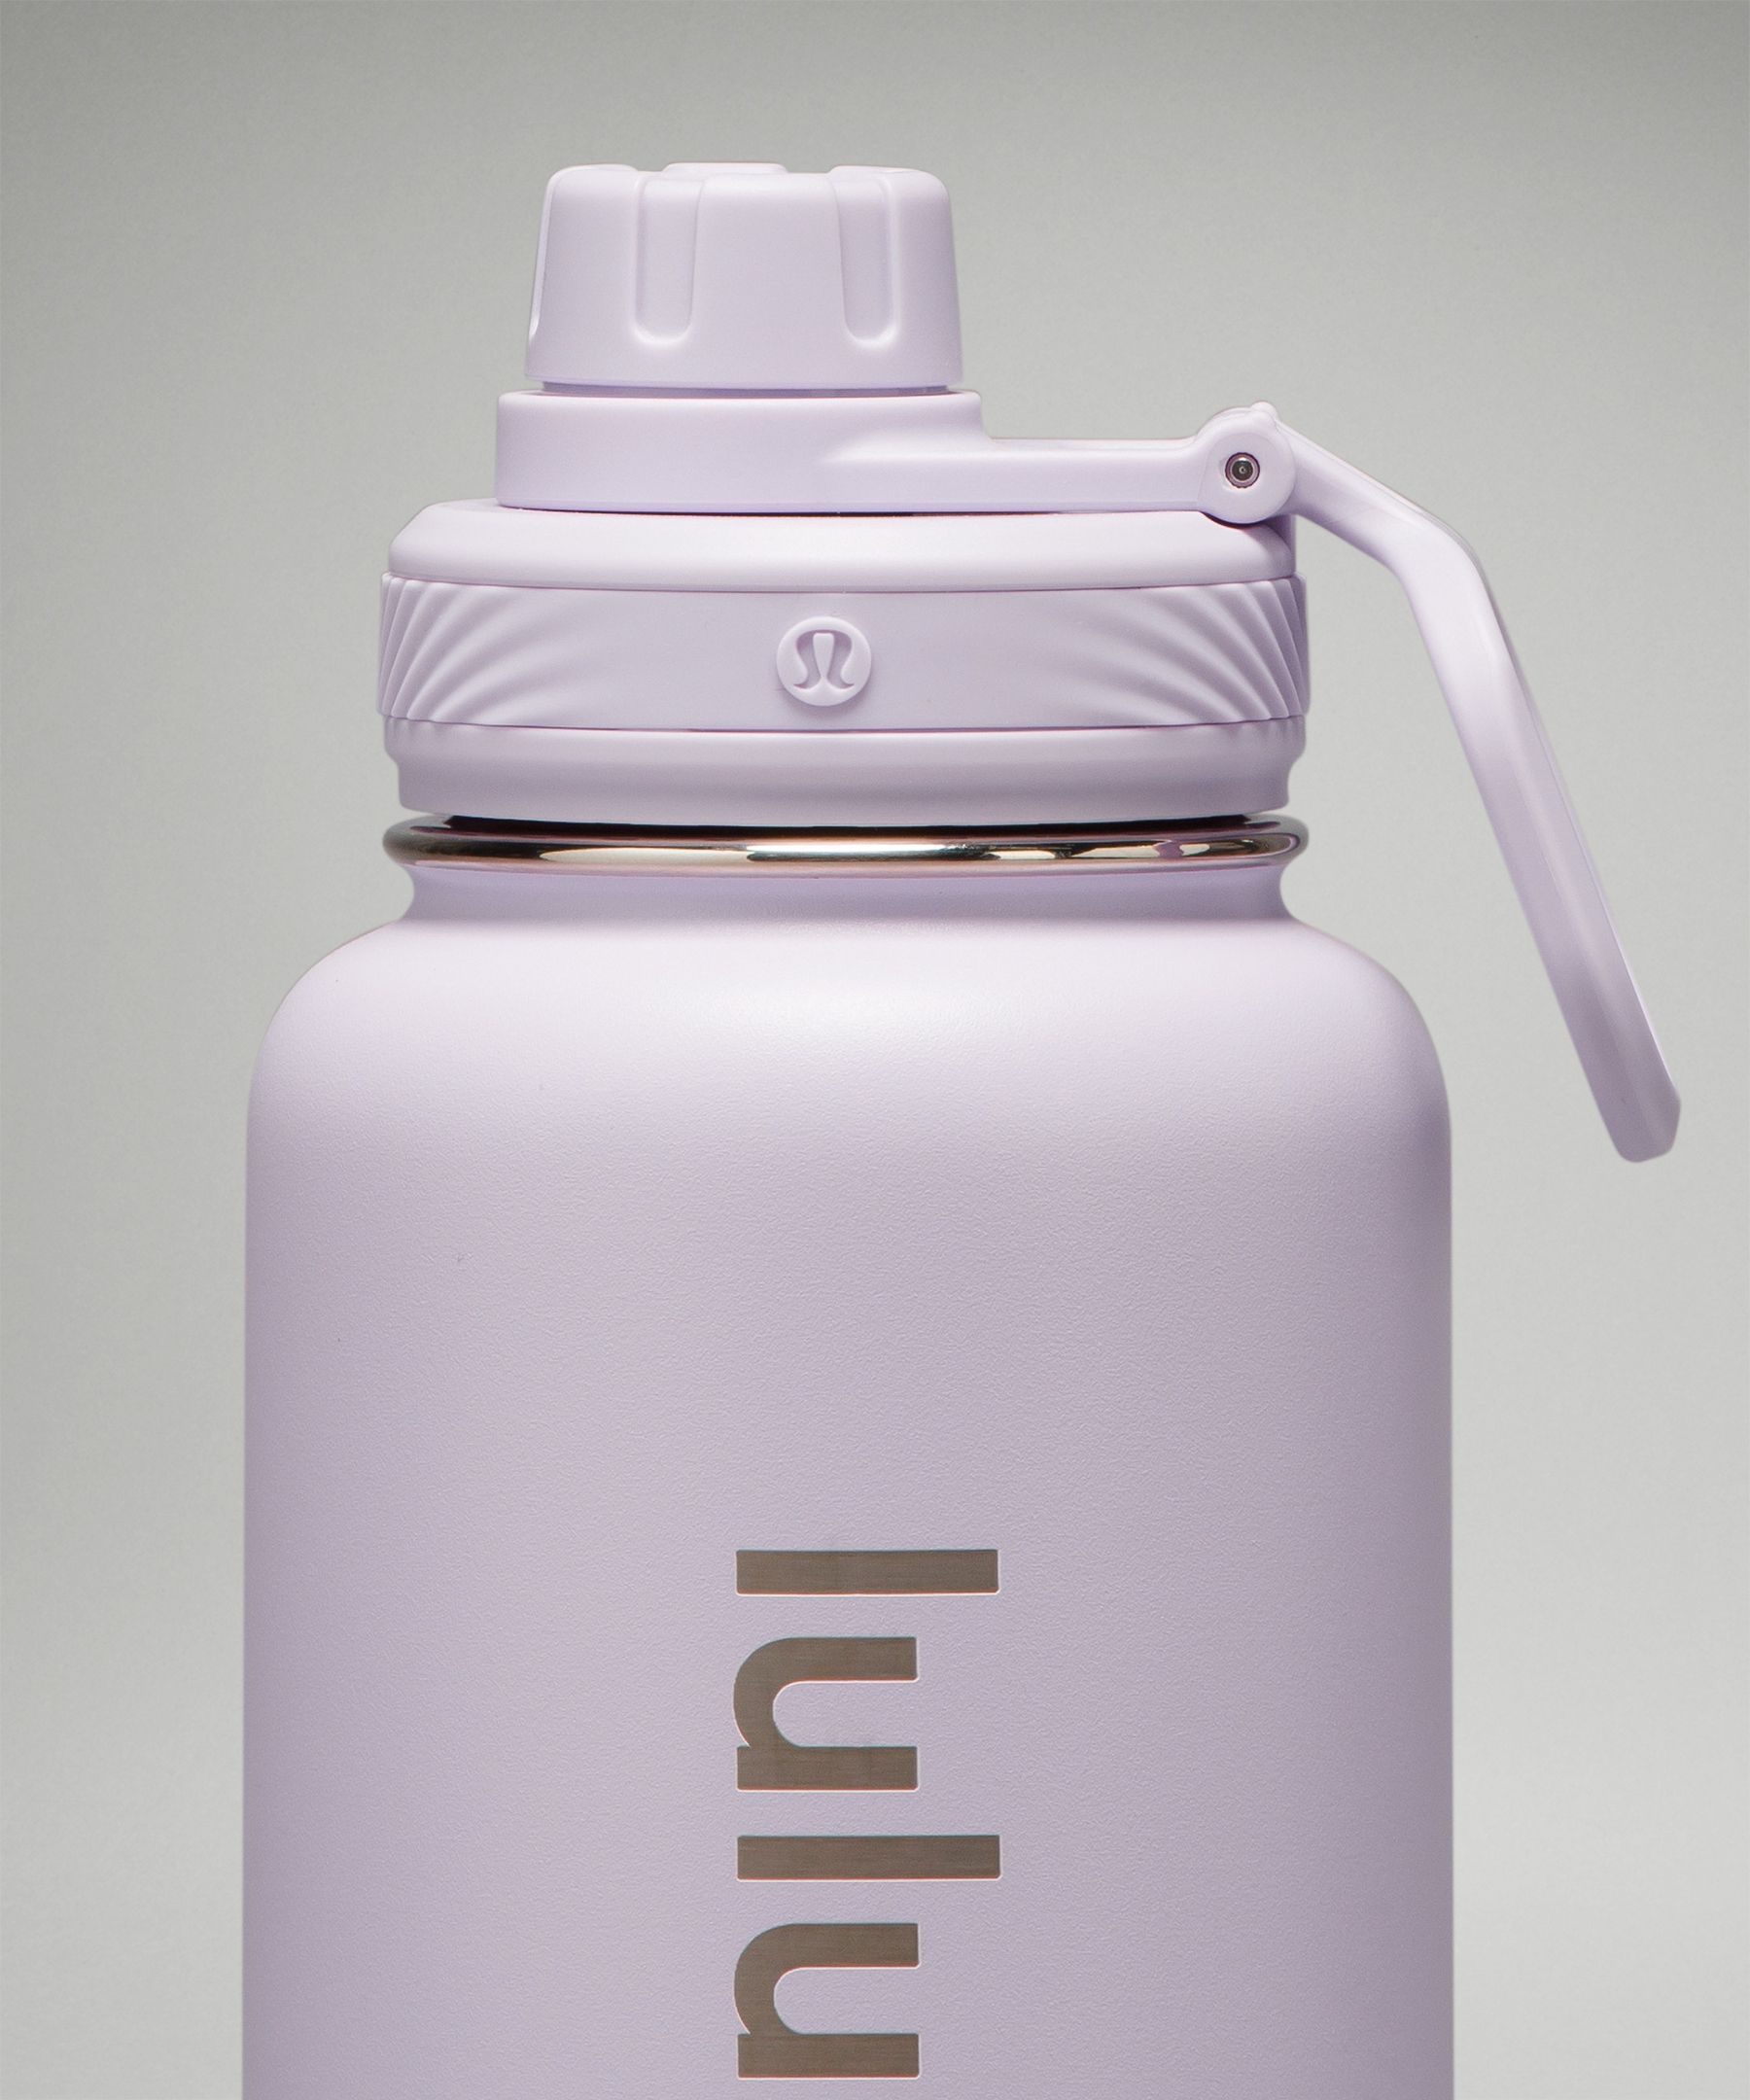 Lululemon Back To Life Insulated Sport Water Bottle 32oz White